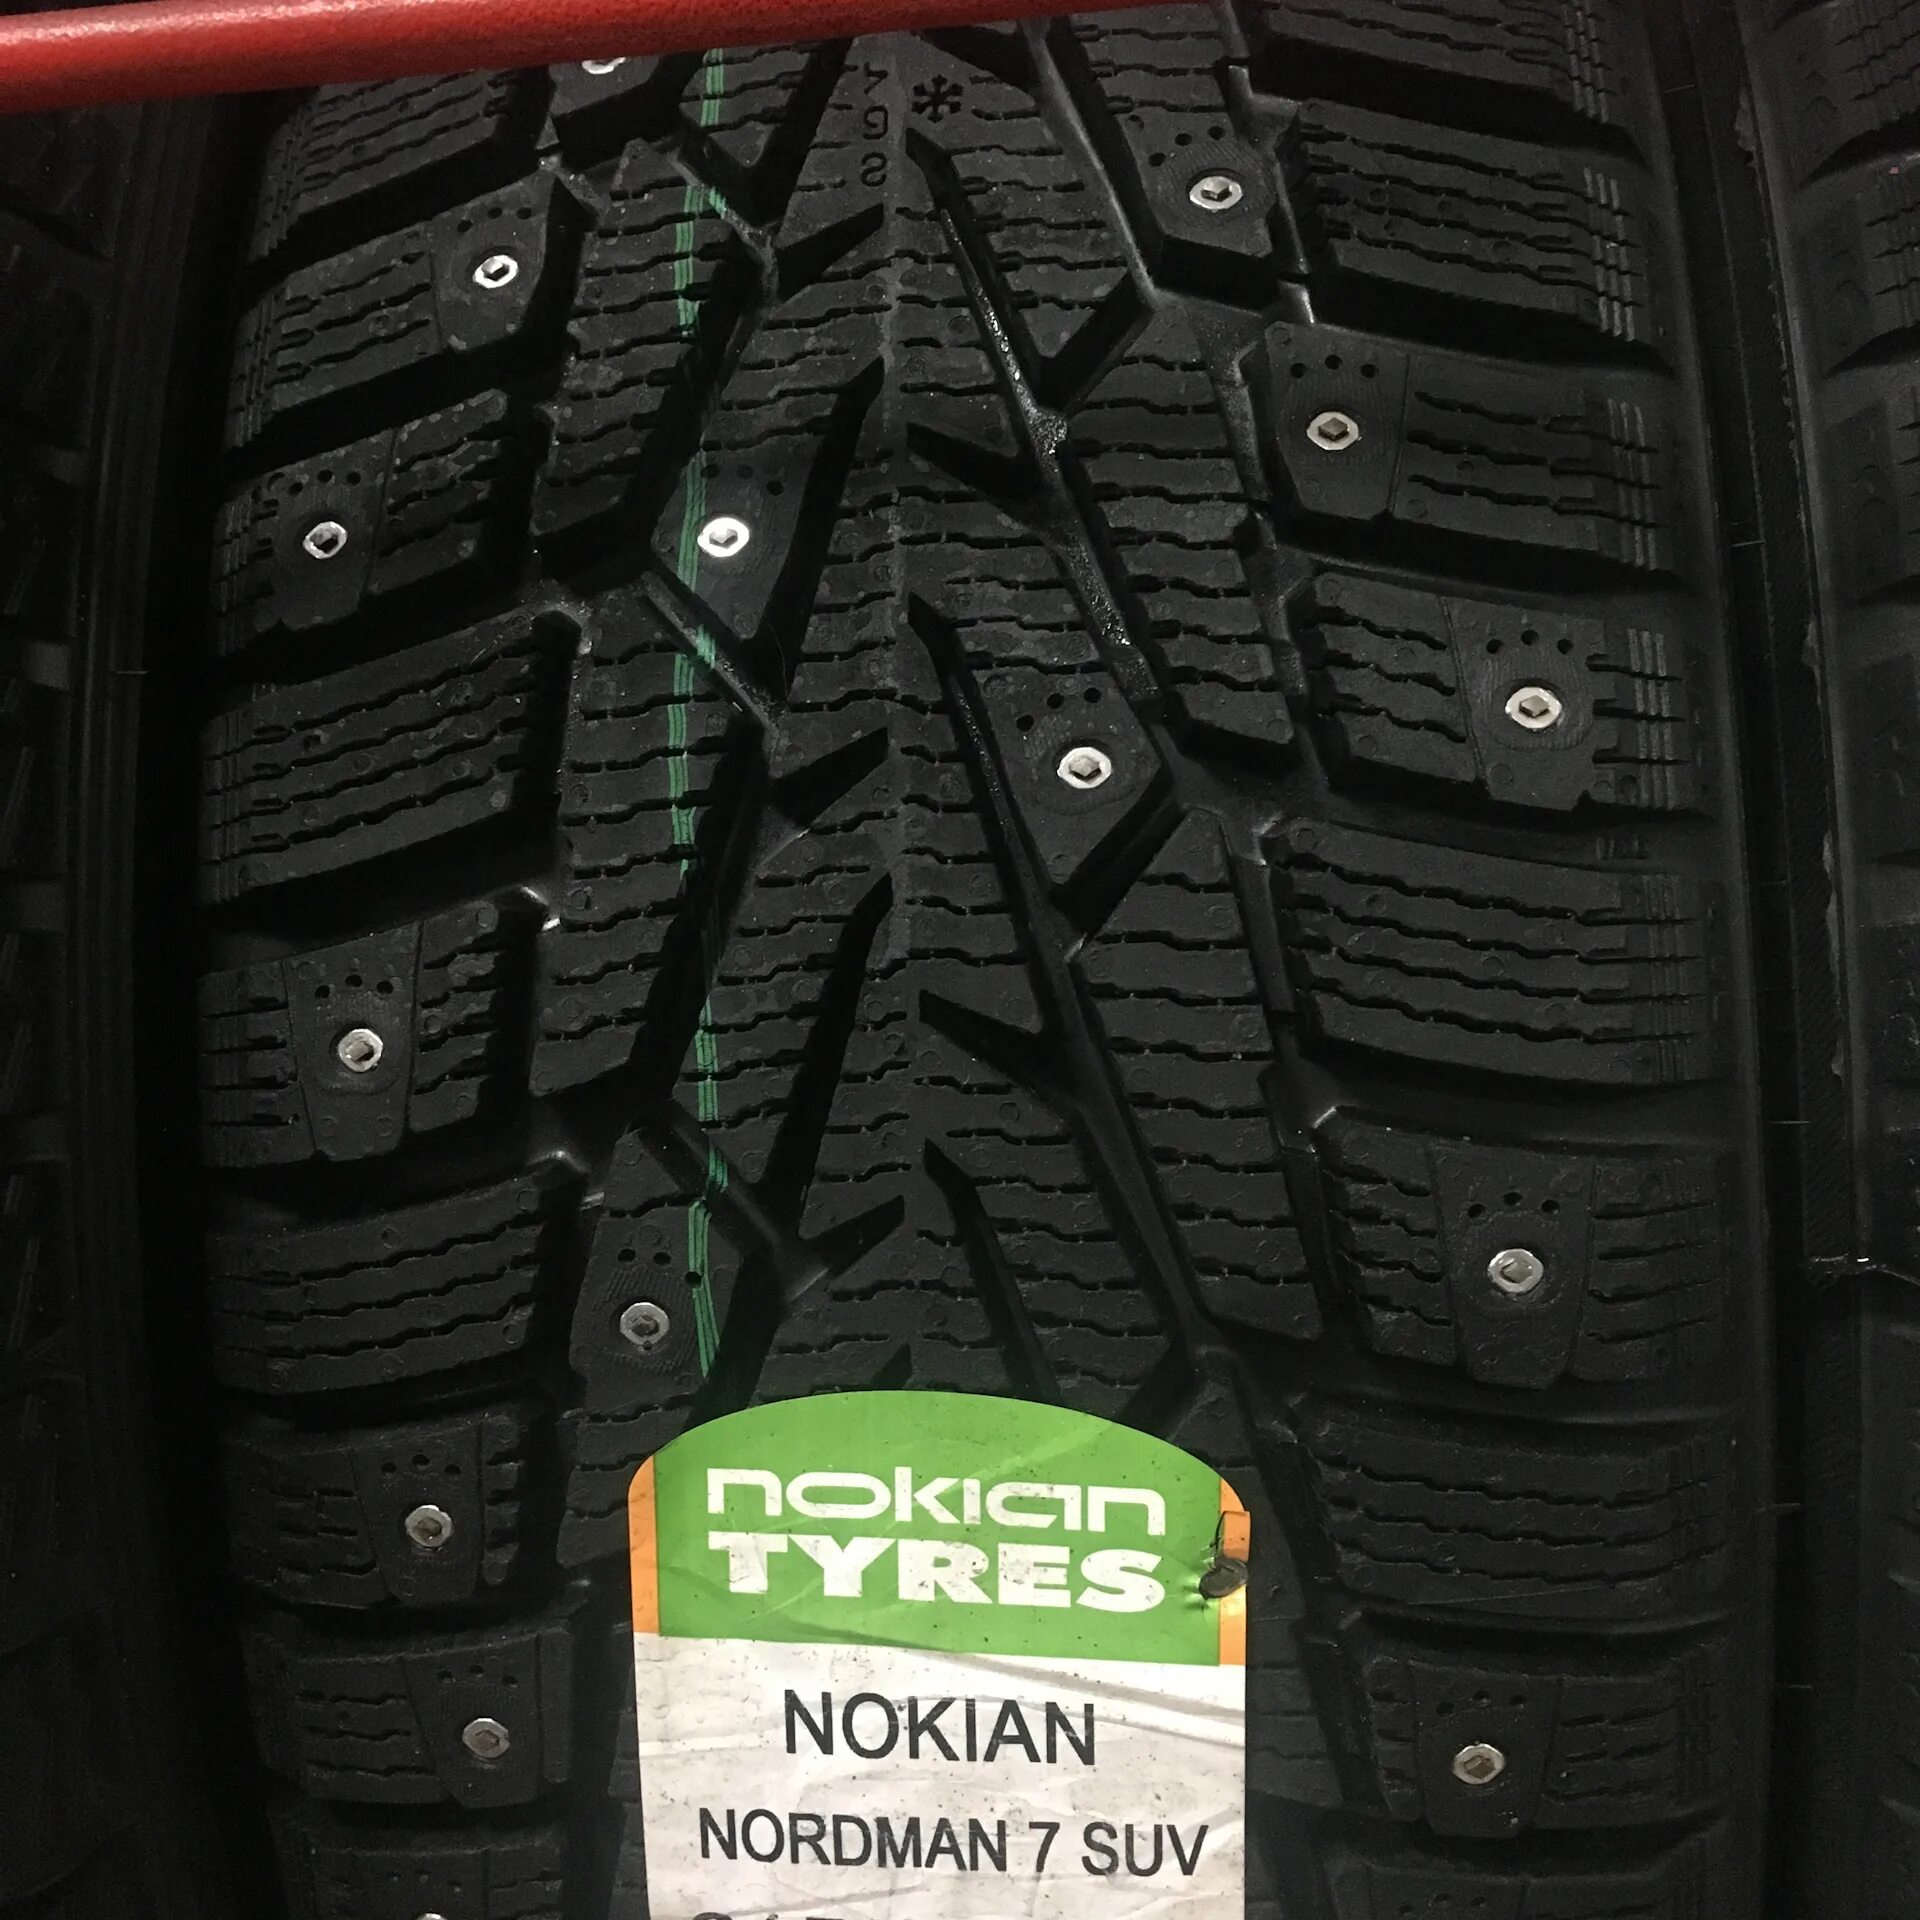 Nordman 7 suv r17. Нордман 7 SUV. Nokian Nordman 7 SUV. Nokian Tyres Nordman 7 SUV. Нордман 7 SUV 215 65 16.